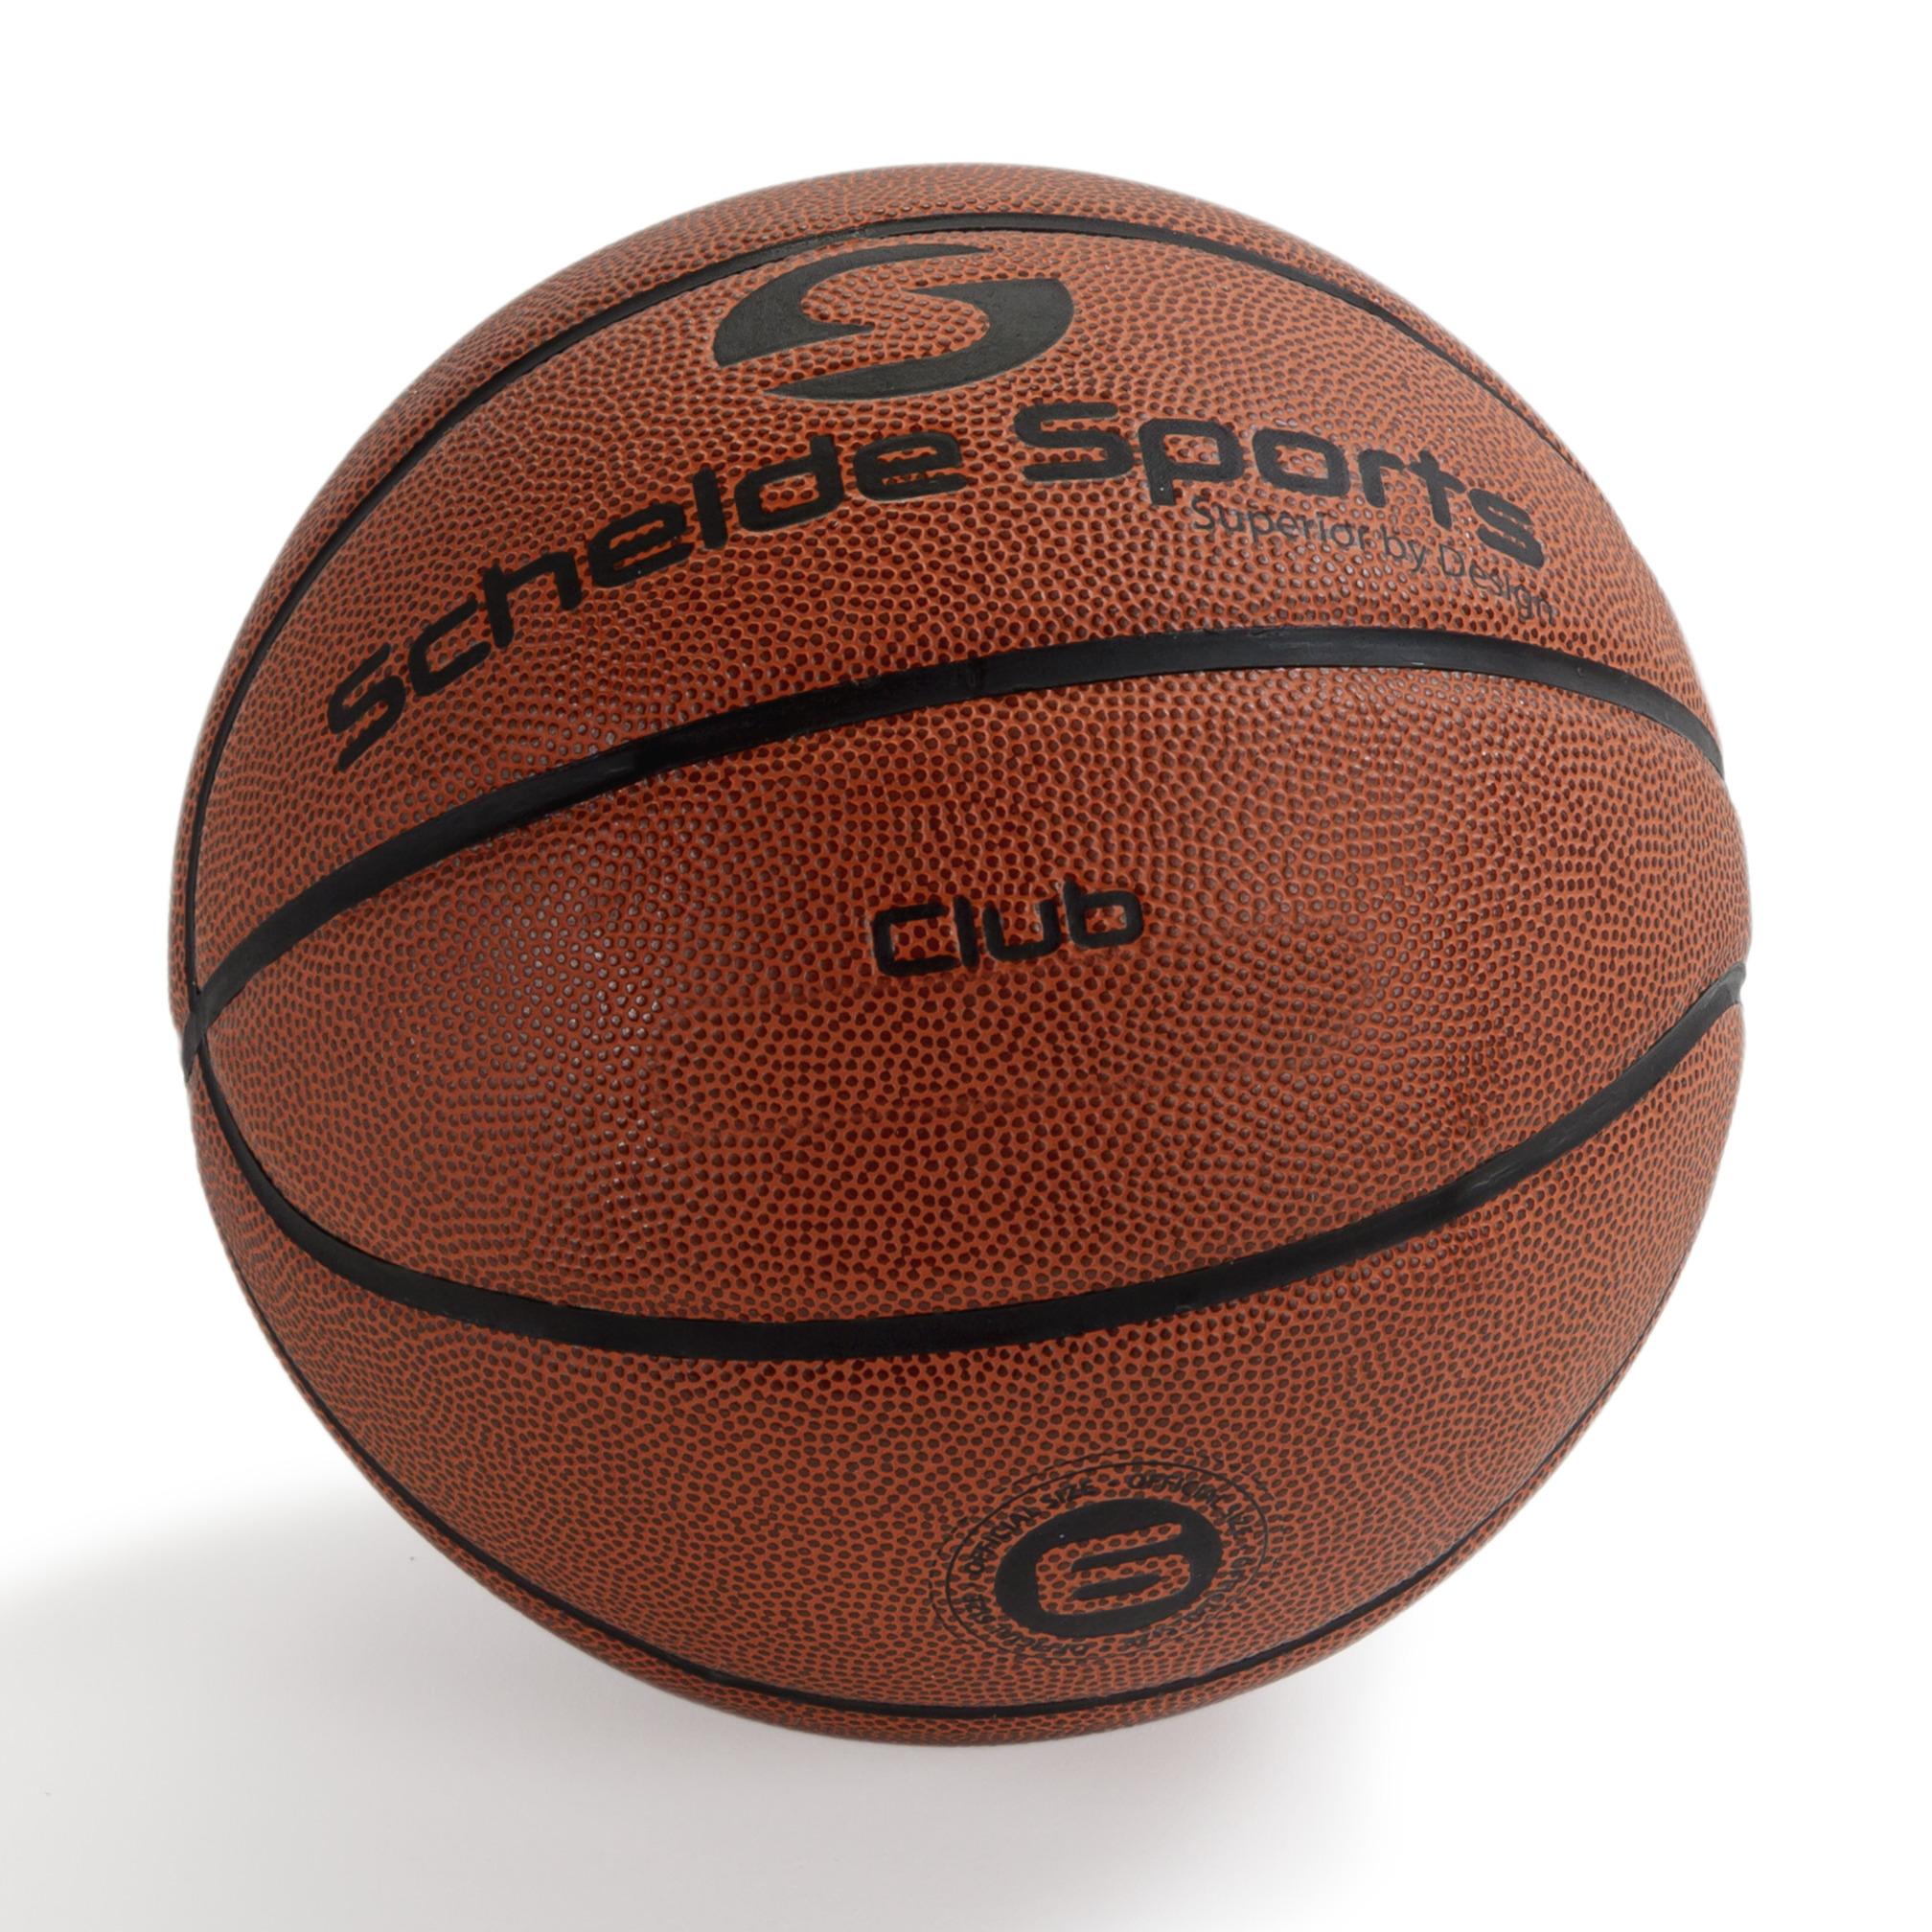 Schelde Sports Basketball Club, size 6